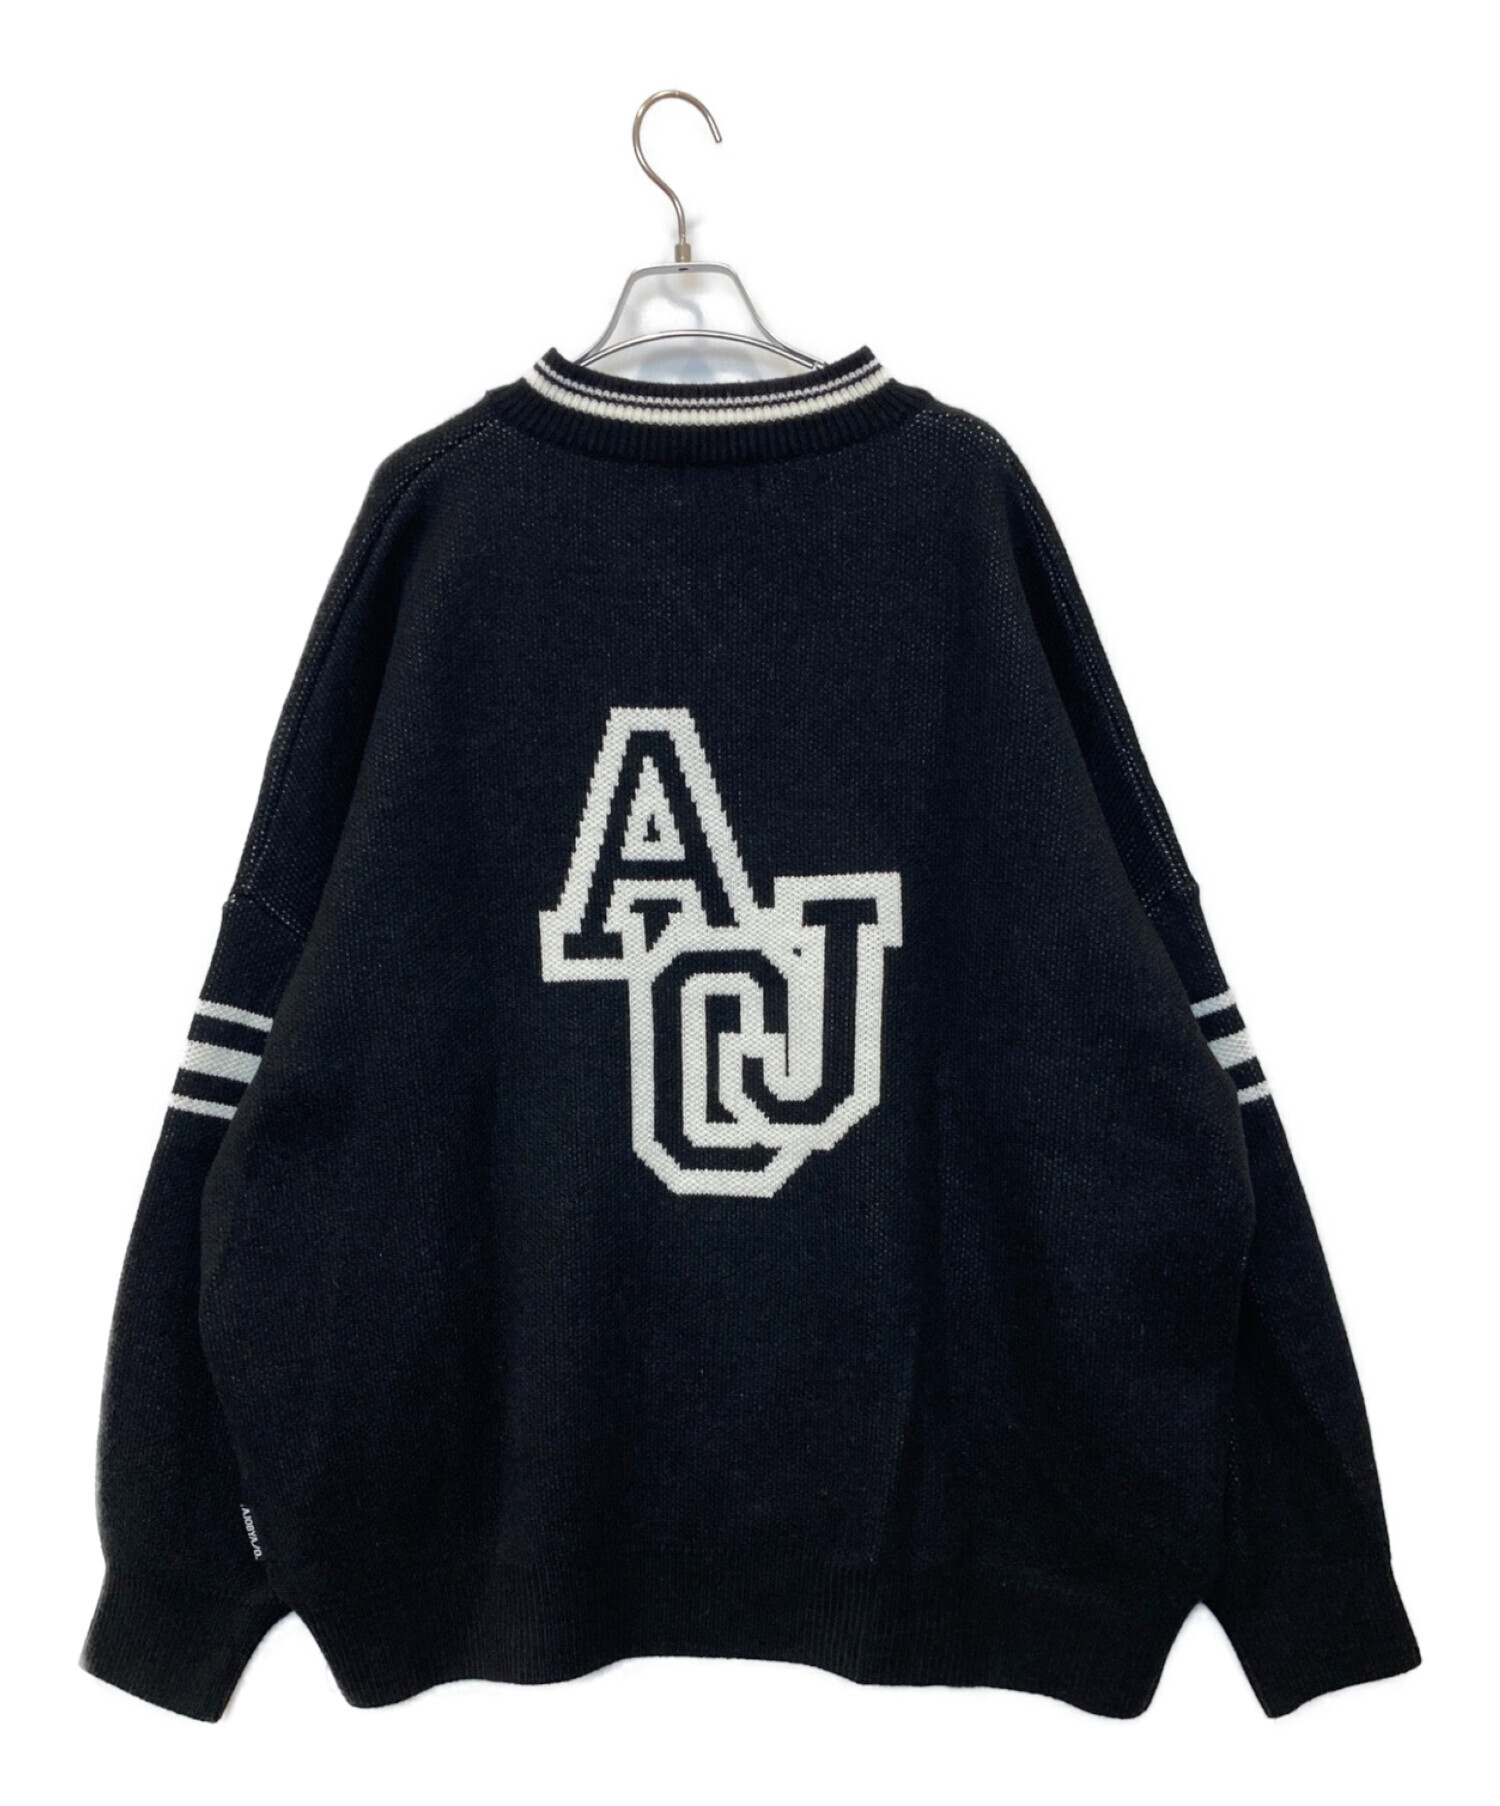 AJOBYAJO (アジョバイアジョ) フットボールオーバーサイズセーター ブラック サイズ:XL